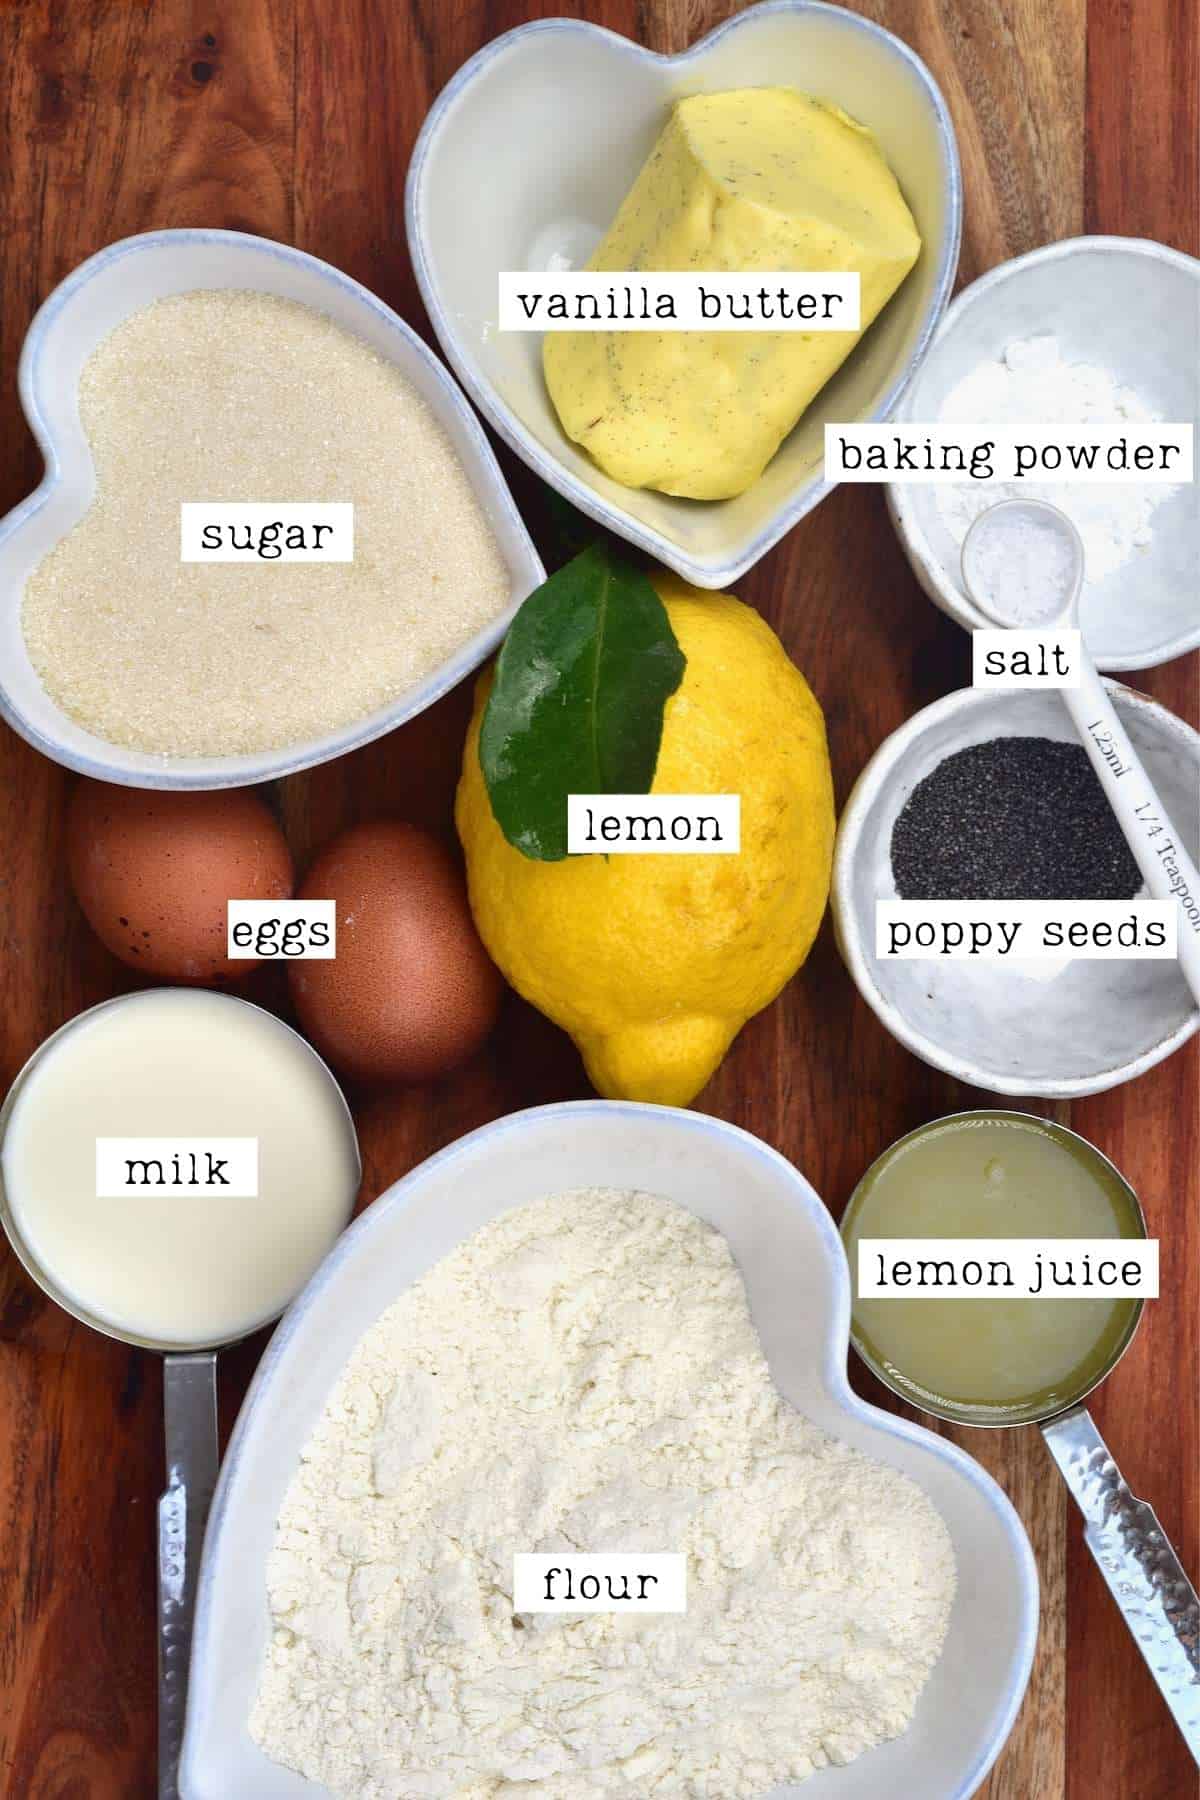 Ingredients for lemon cupcakes